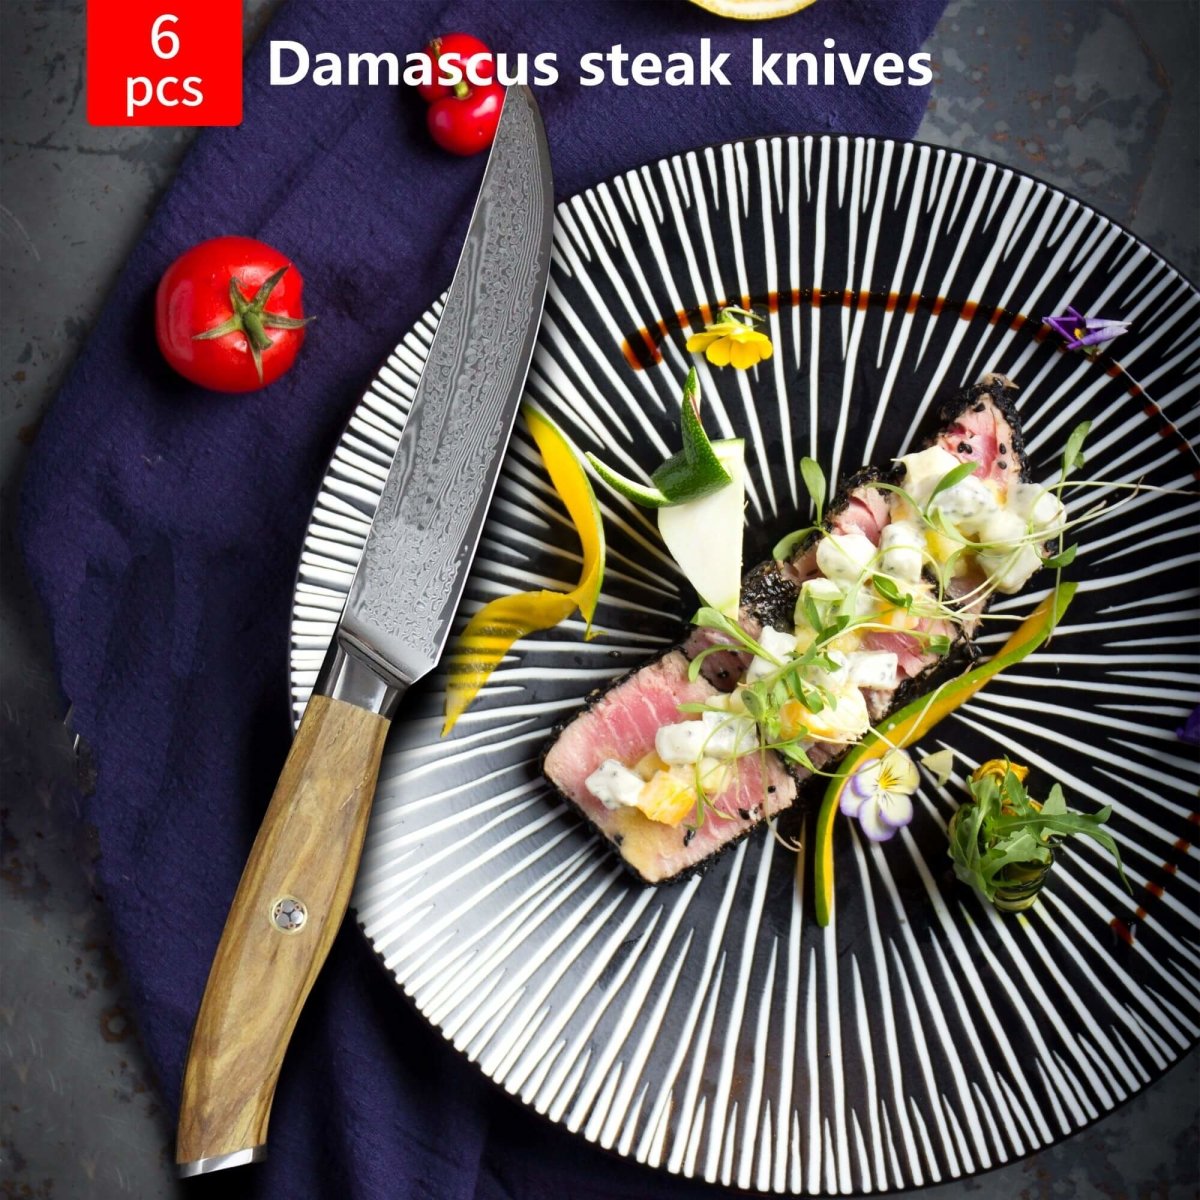 NON SERRATED STEAK KNIFE SET 6-PIECE JAPANESE DAMASCUS STEEL OLIVE WOOD HANDLE